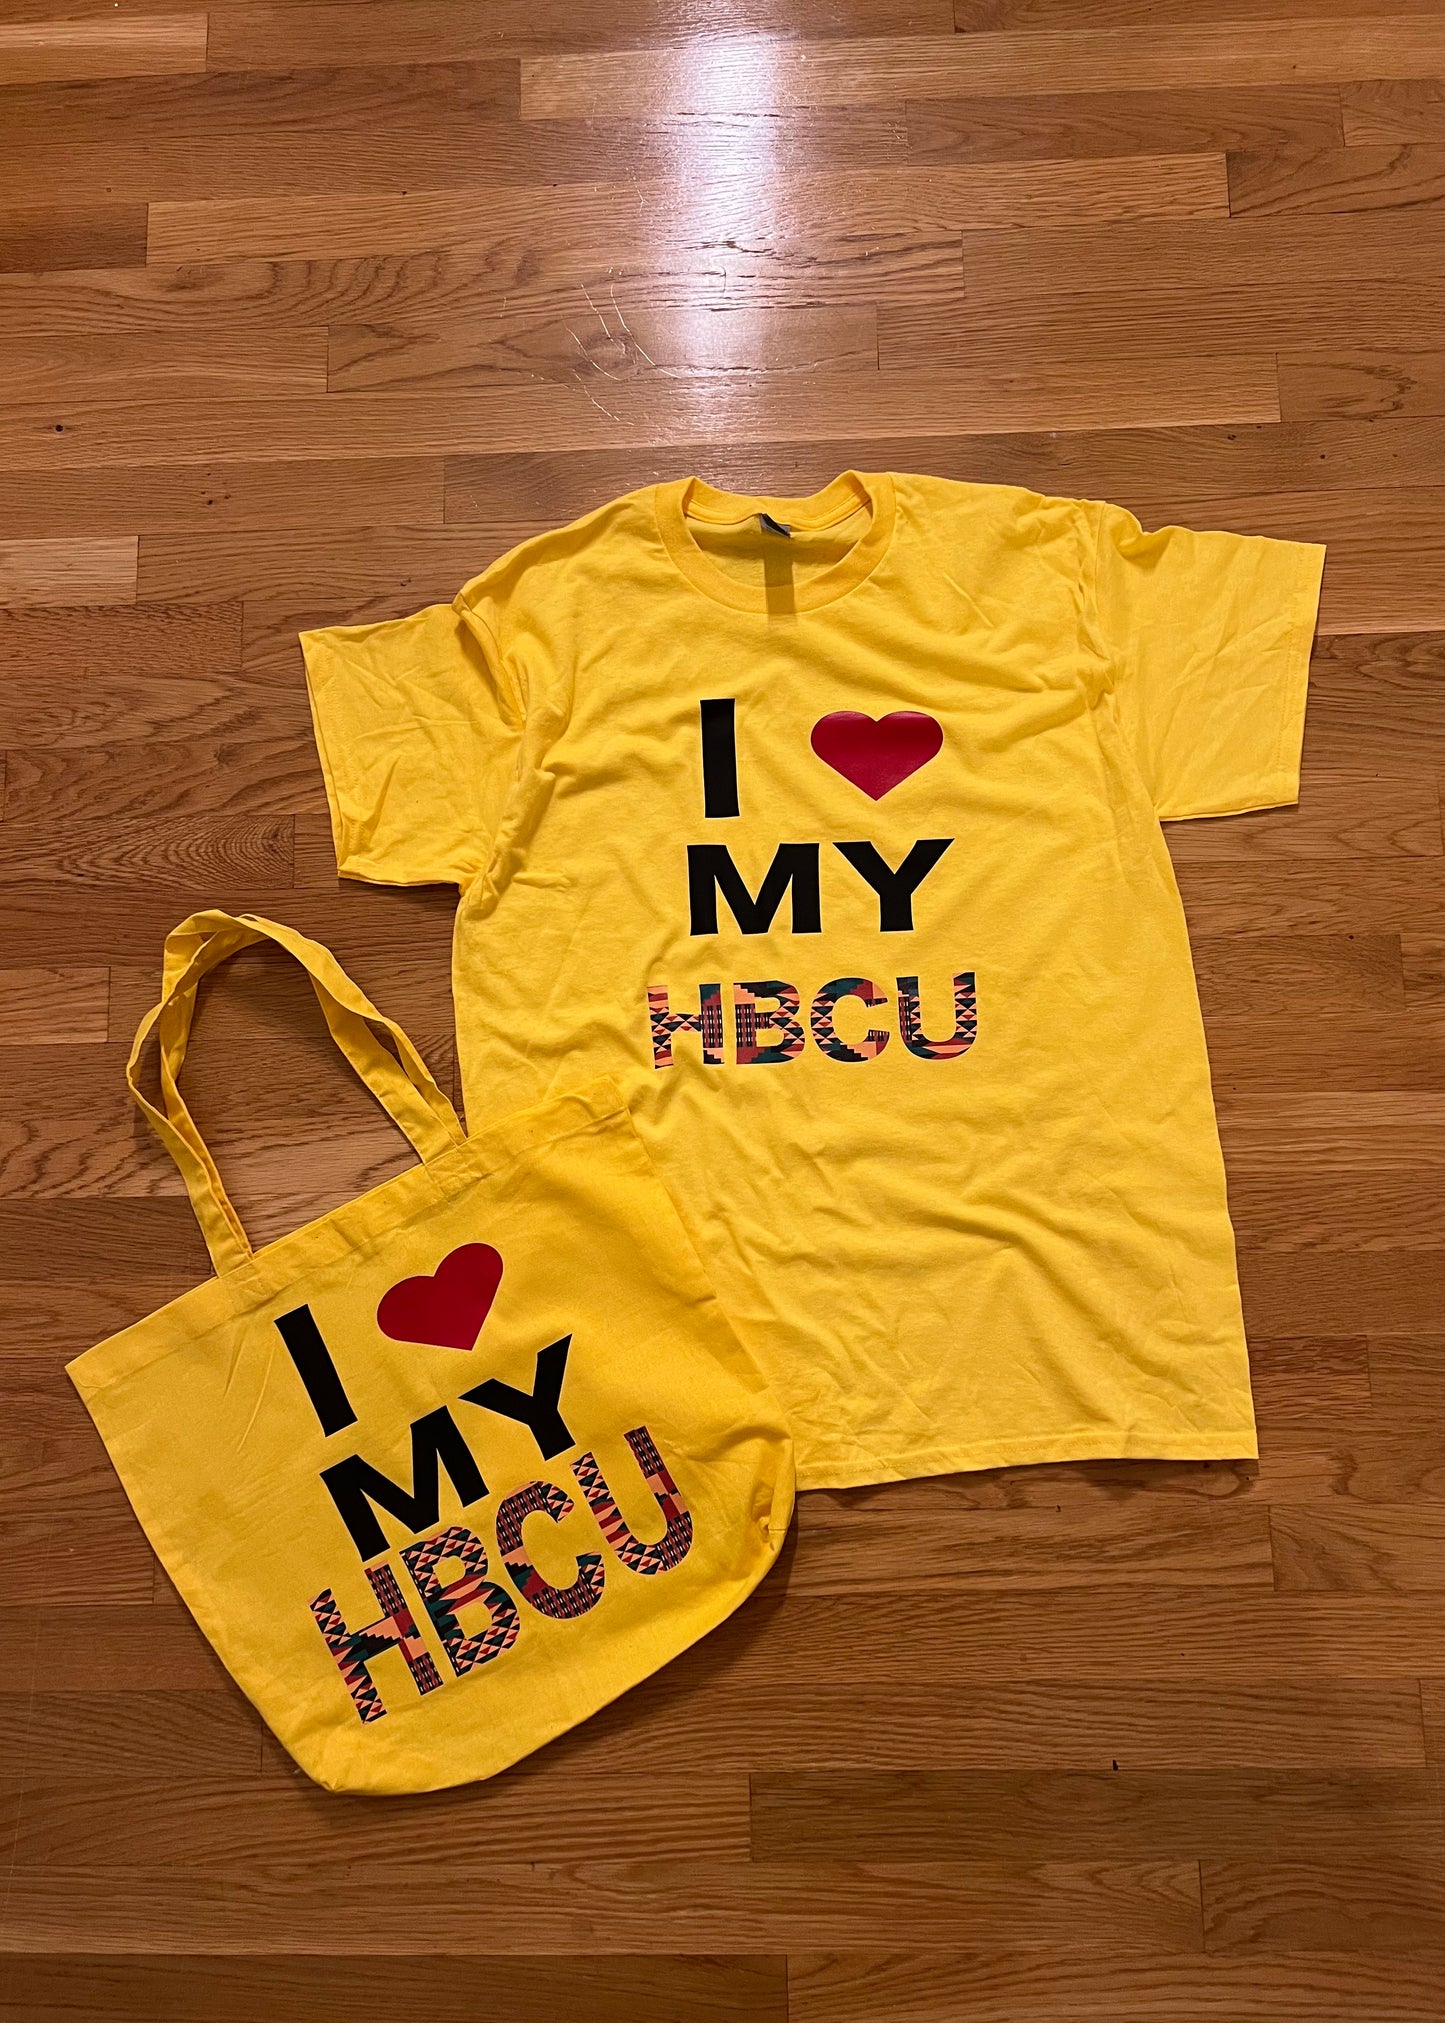 HBCU Shirt 2